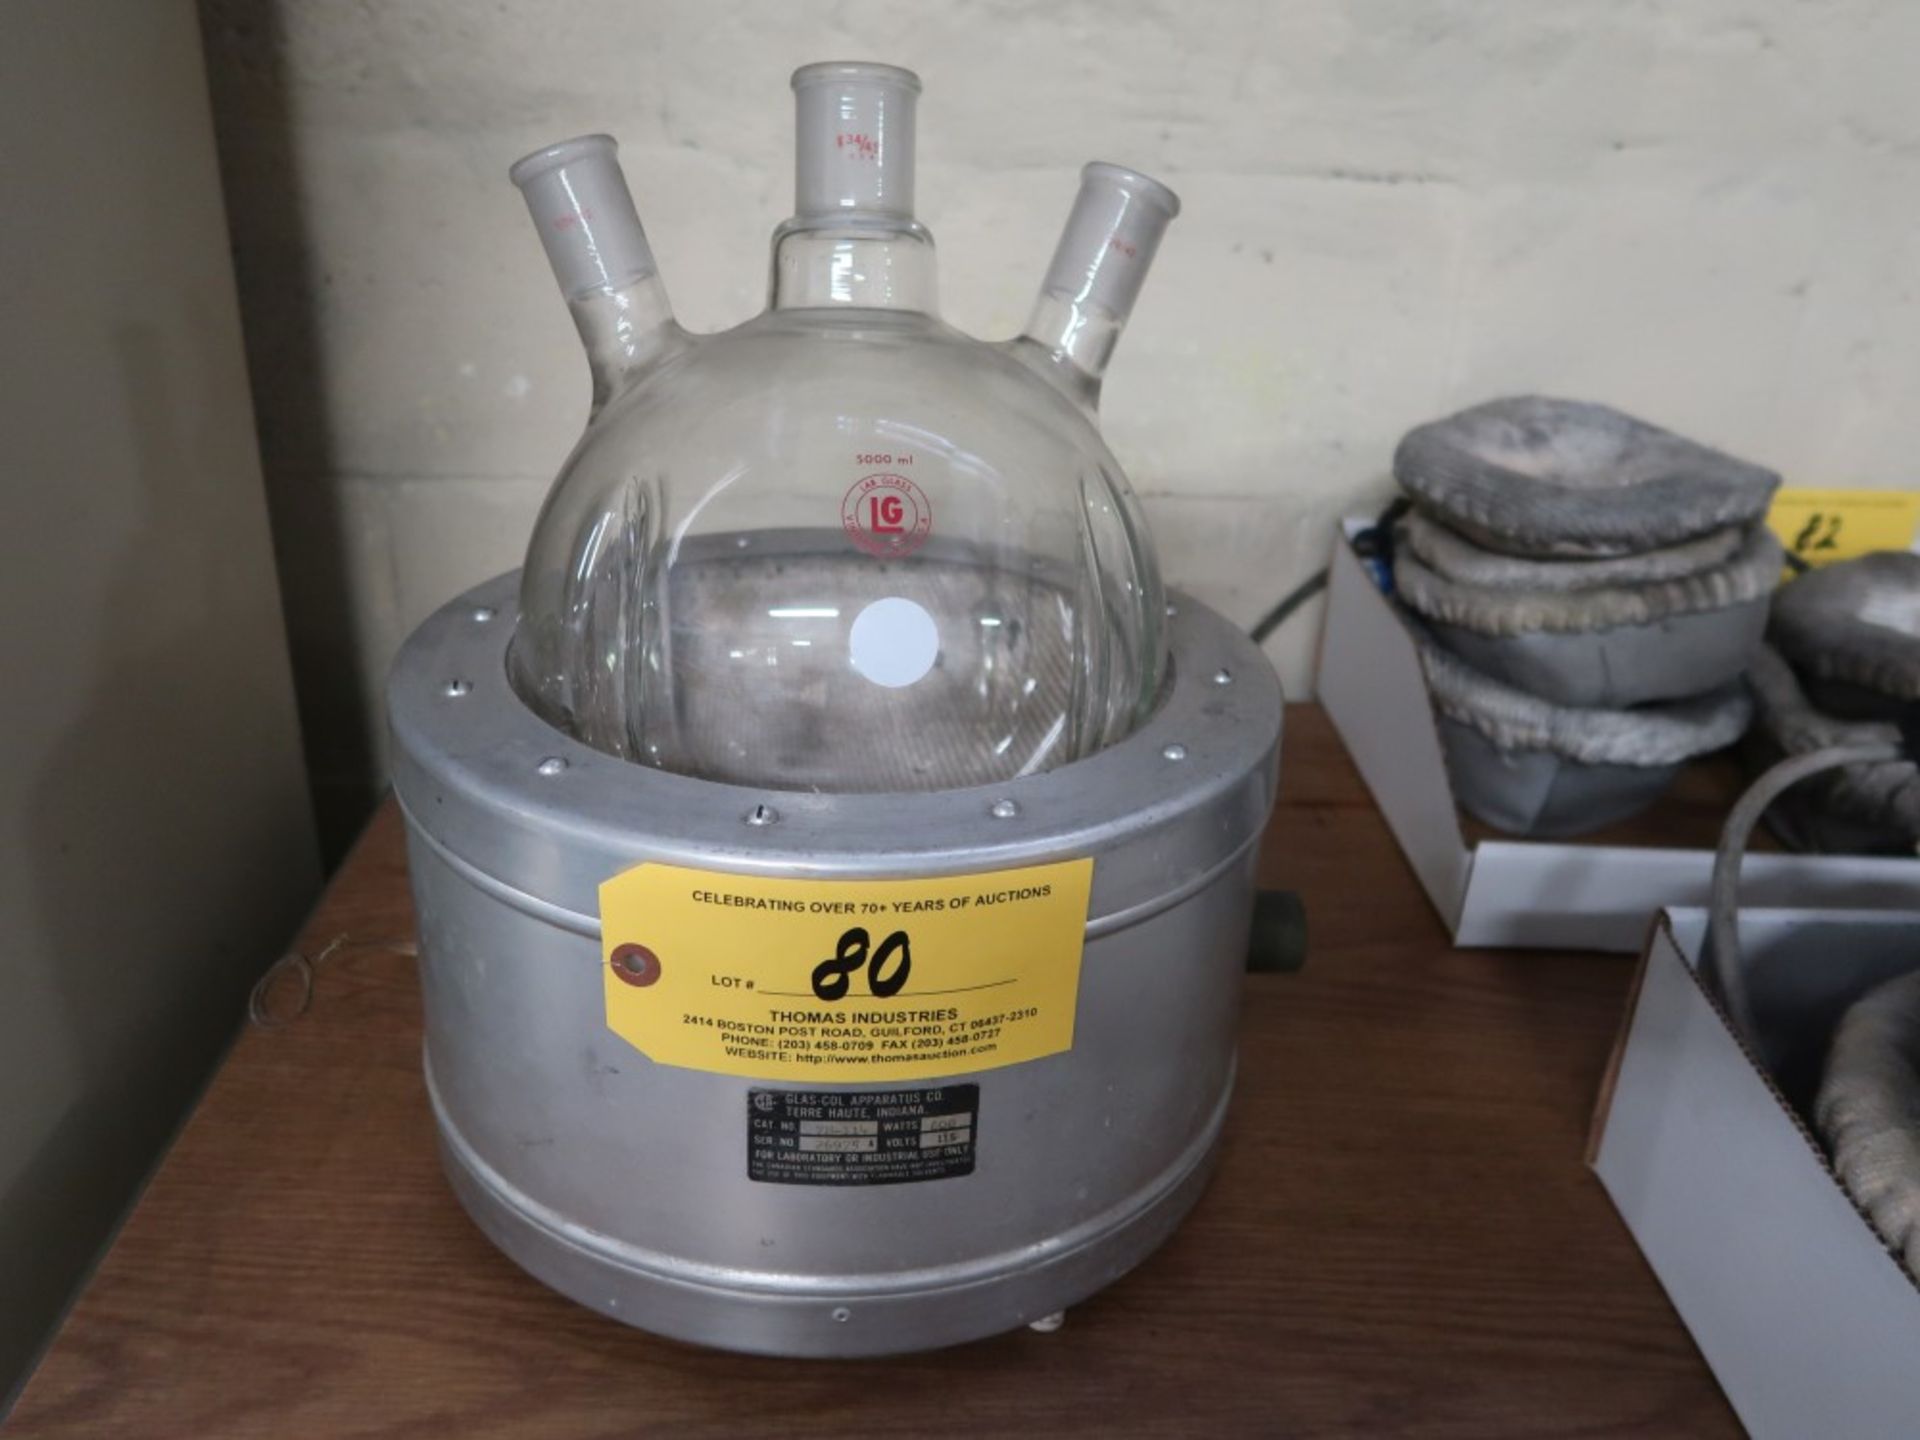 9" Dia Glas-ColApprataus Botton Heating Mantle w/ LG 5000 ML 3 Neck Flask S/N 26975 600 Watts - Image 2 of 3